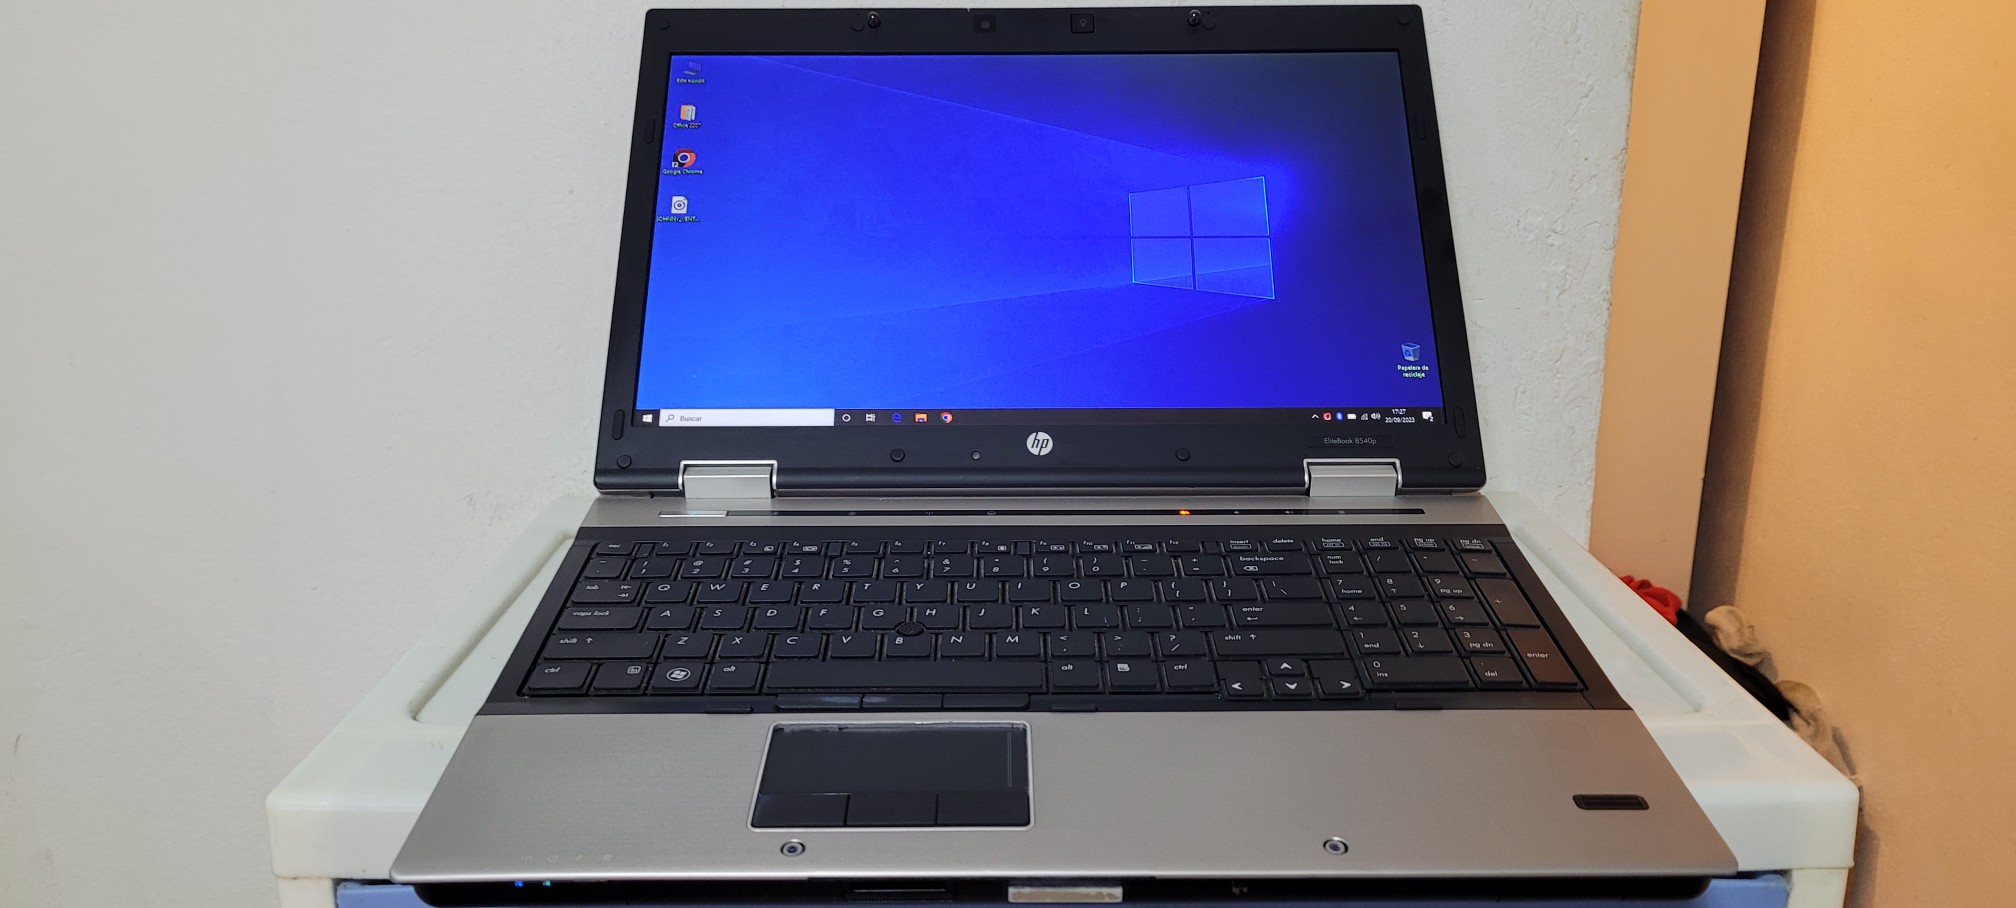 computadoras y laptops - Laptop hp ElitebooK 17 Pulg Core i7 2.8ghz Ram 8gb Disco SSD 128GB Nvidea 4gb 0